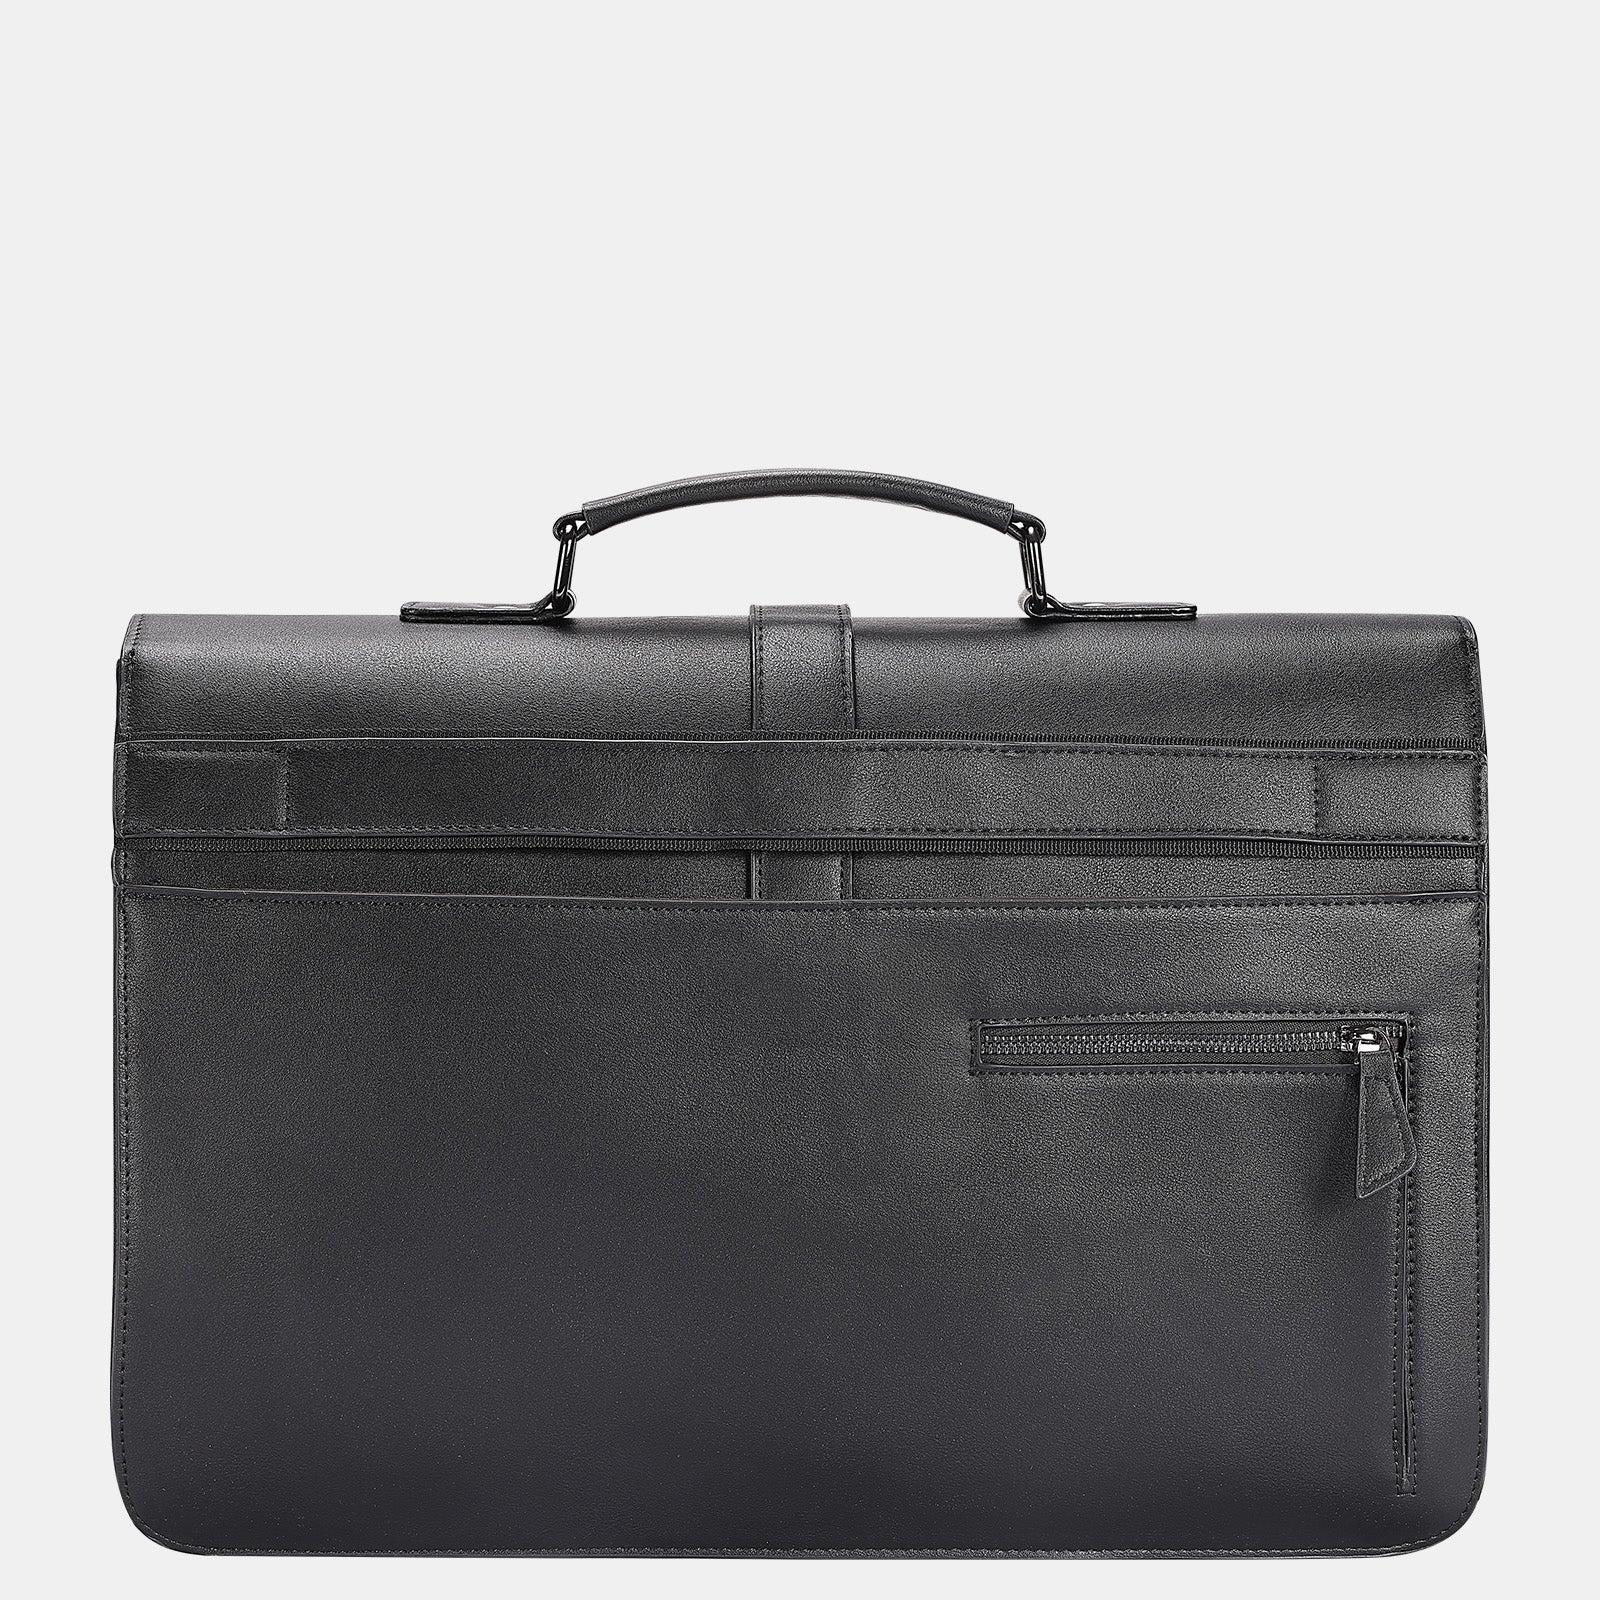 Estarer Laptop Leather Briefcase Black